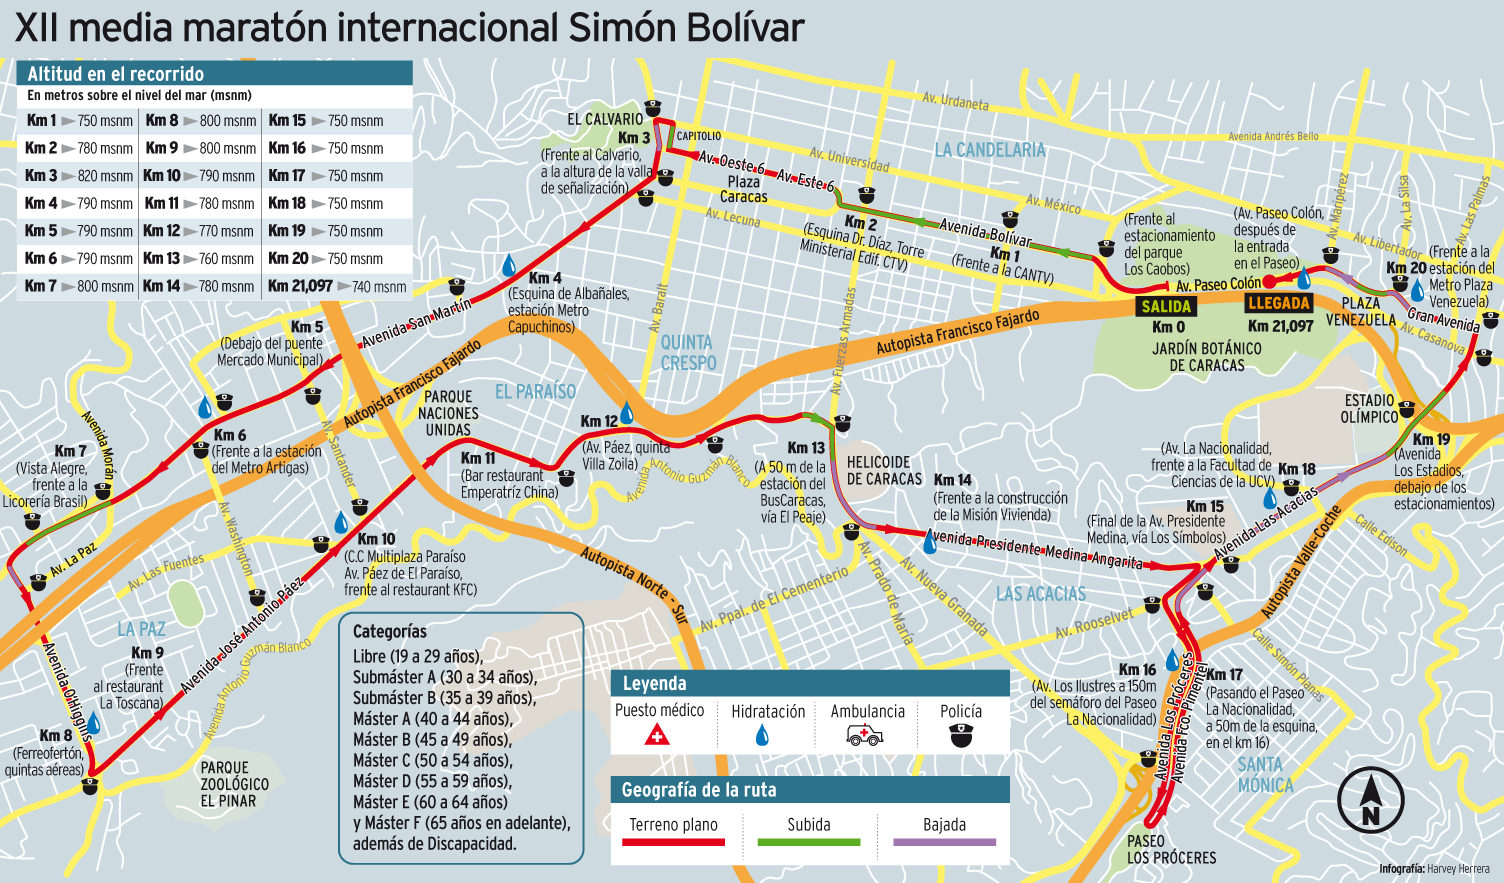 media maraton simon bolivar 2013